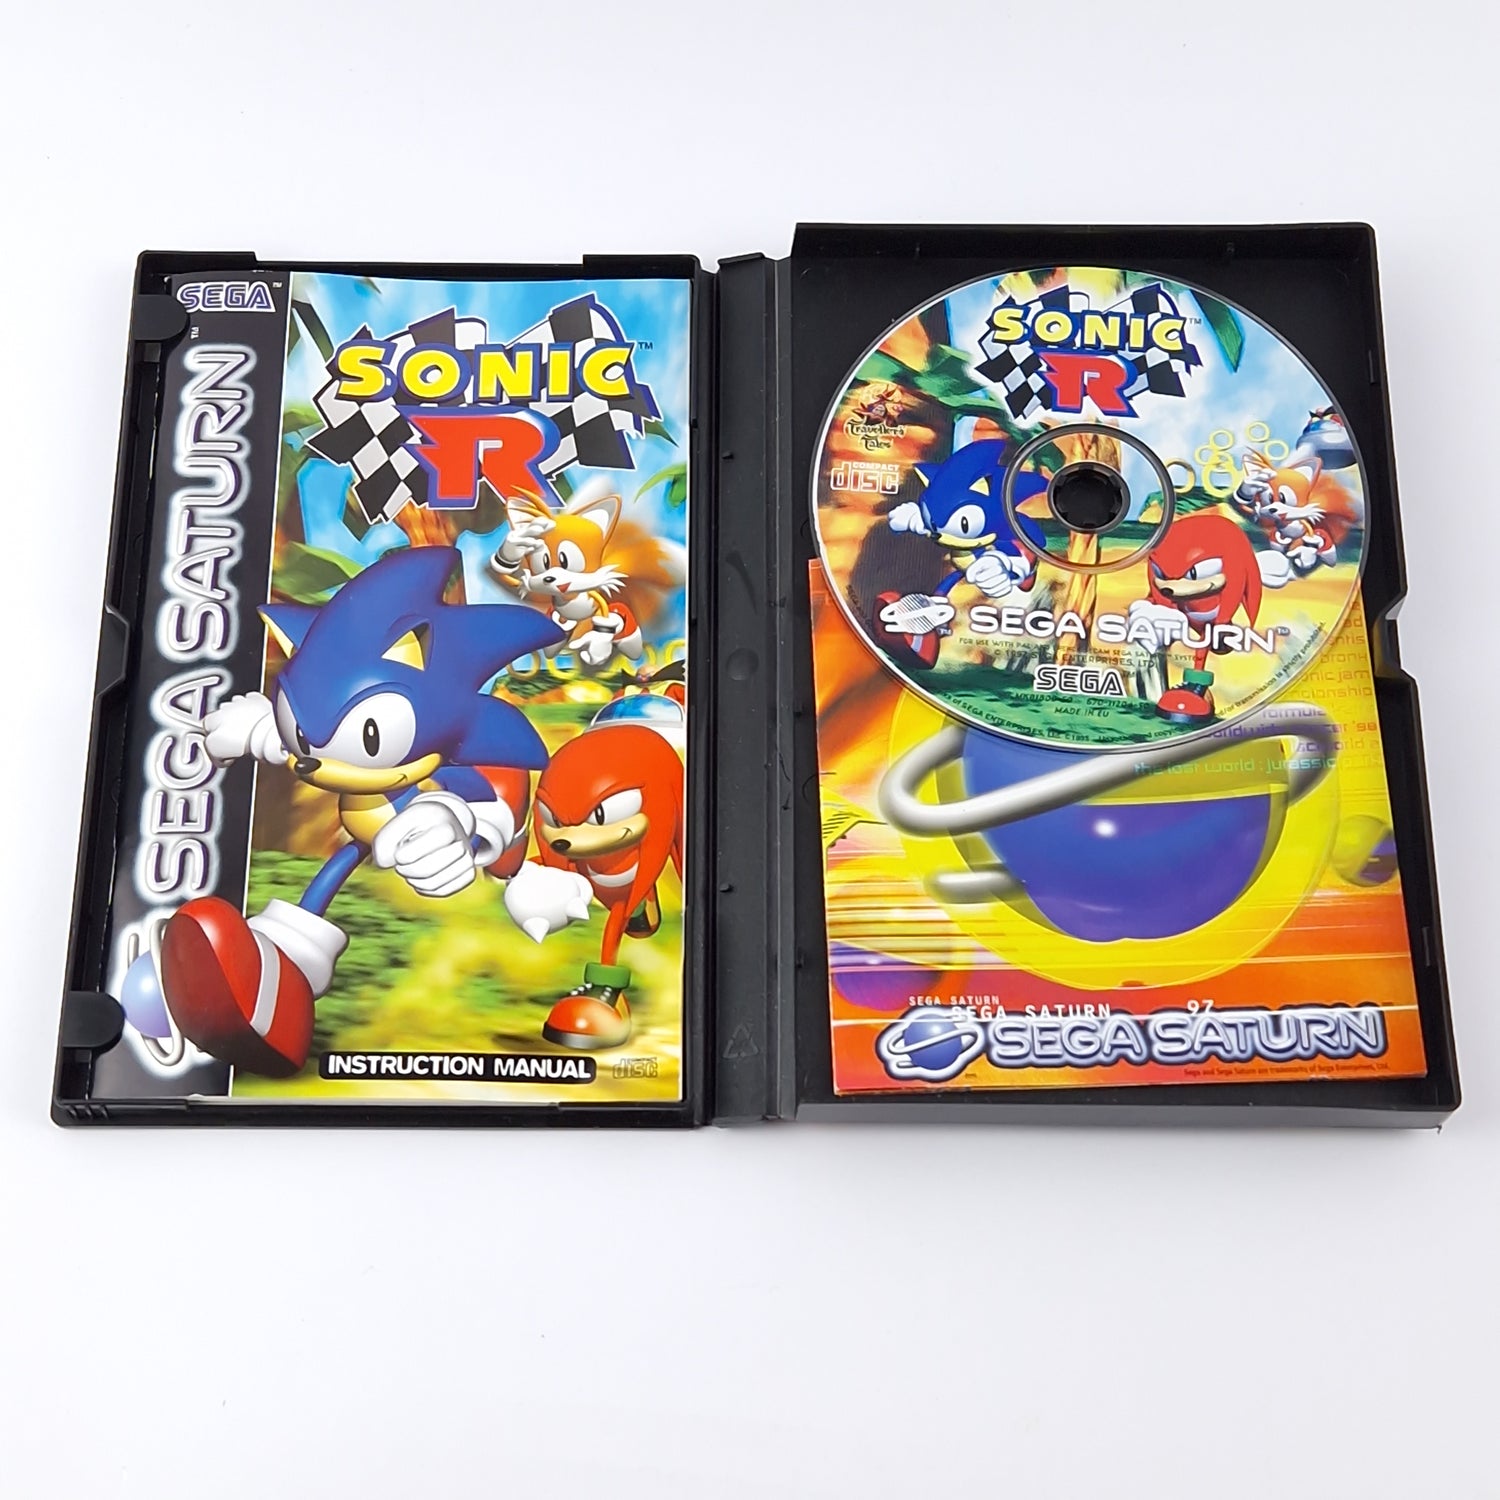 Sega Saturn Game: Sonic R - OVP Instructions CD | Sonic The Hedgehog PAL Game